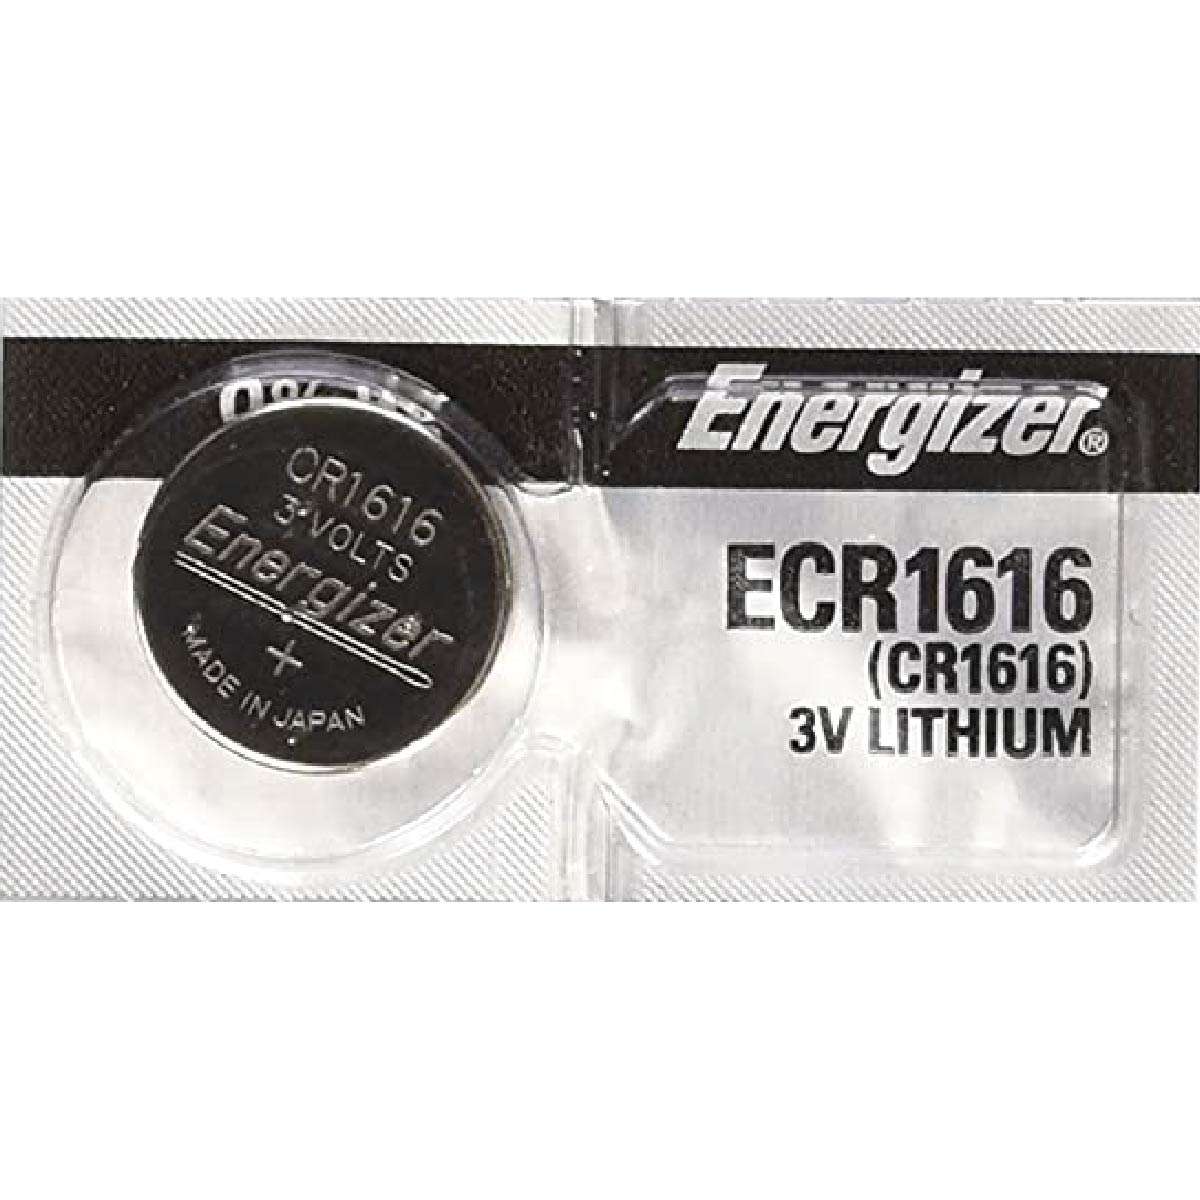 Energizer ECR1616 Battery 3V Lithium Coin Cell (1PC Tearstrip)